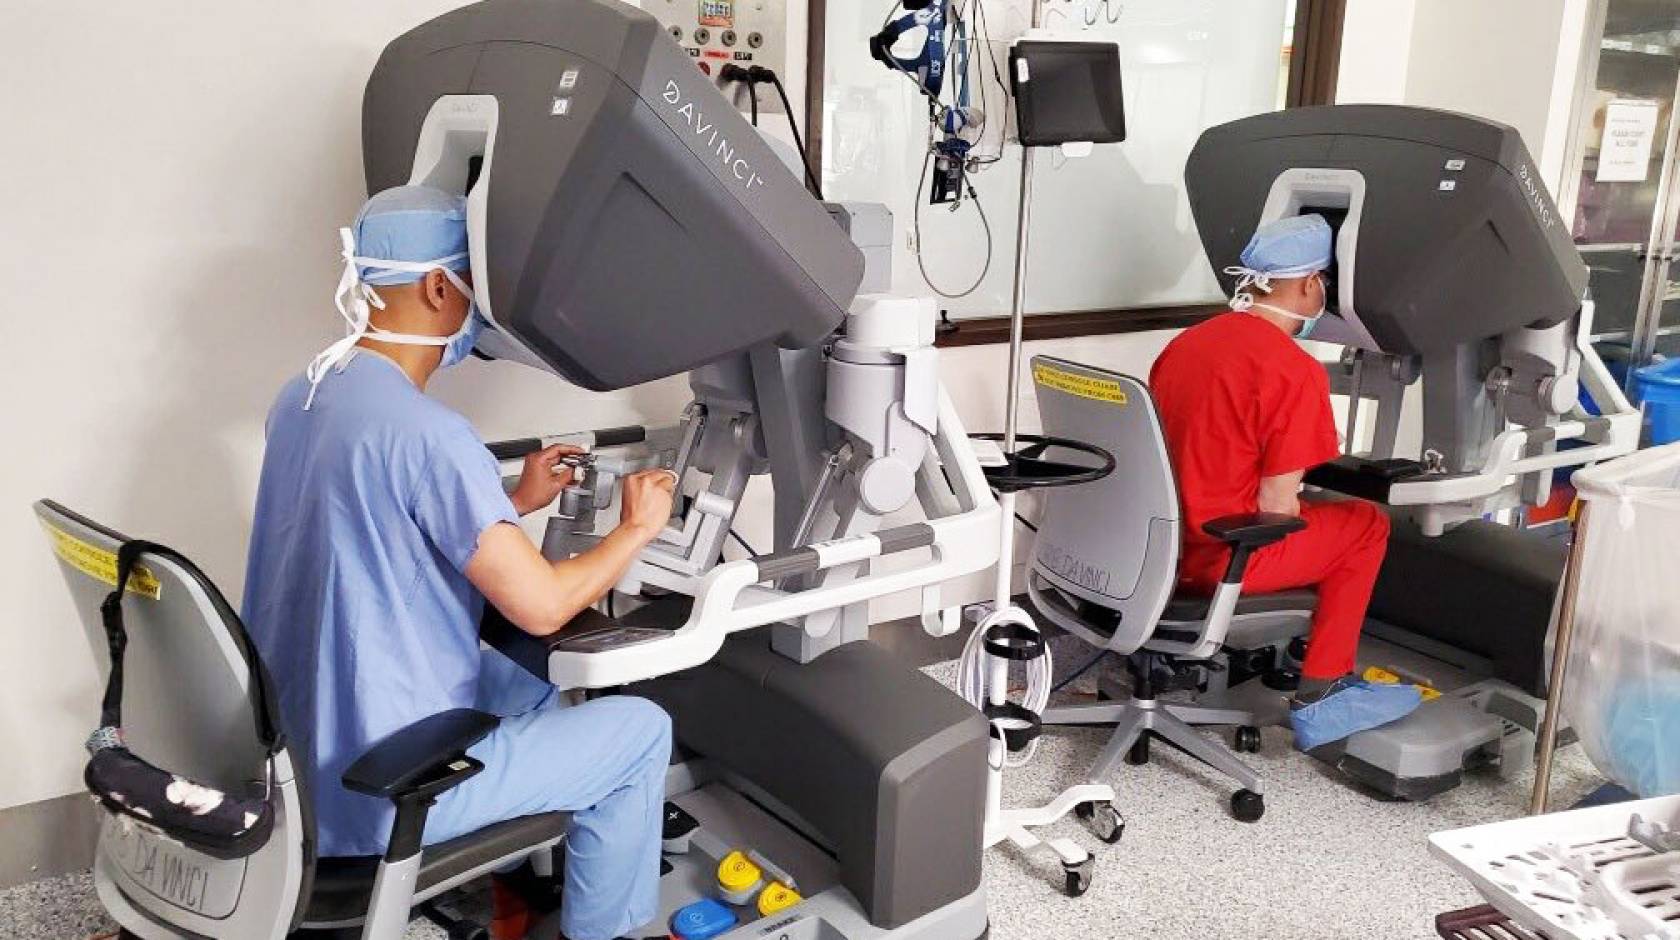 2 surgeons performing a cardiac surgery through machines